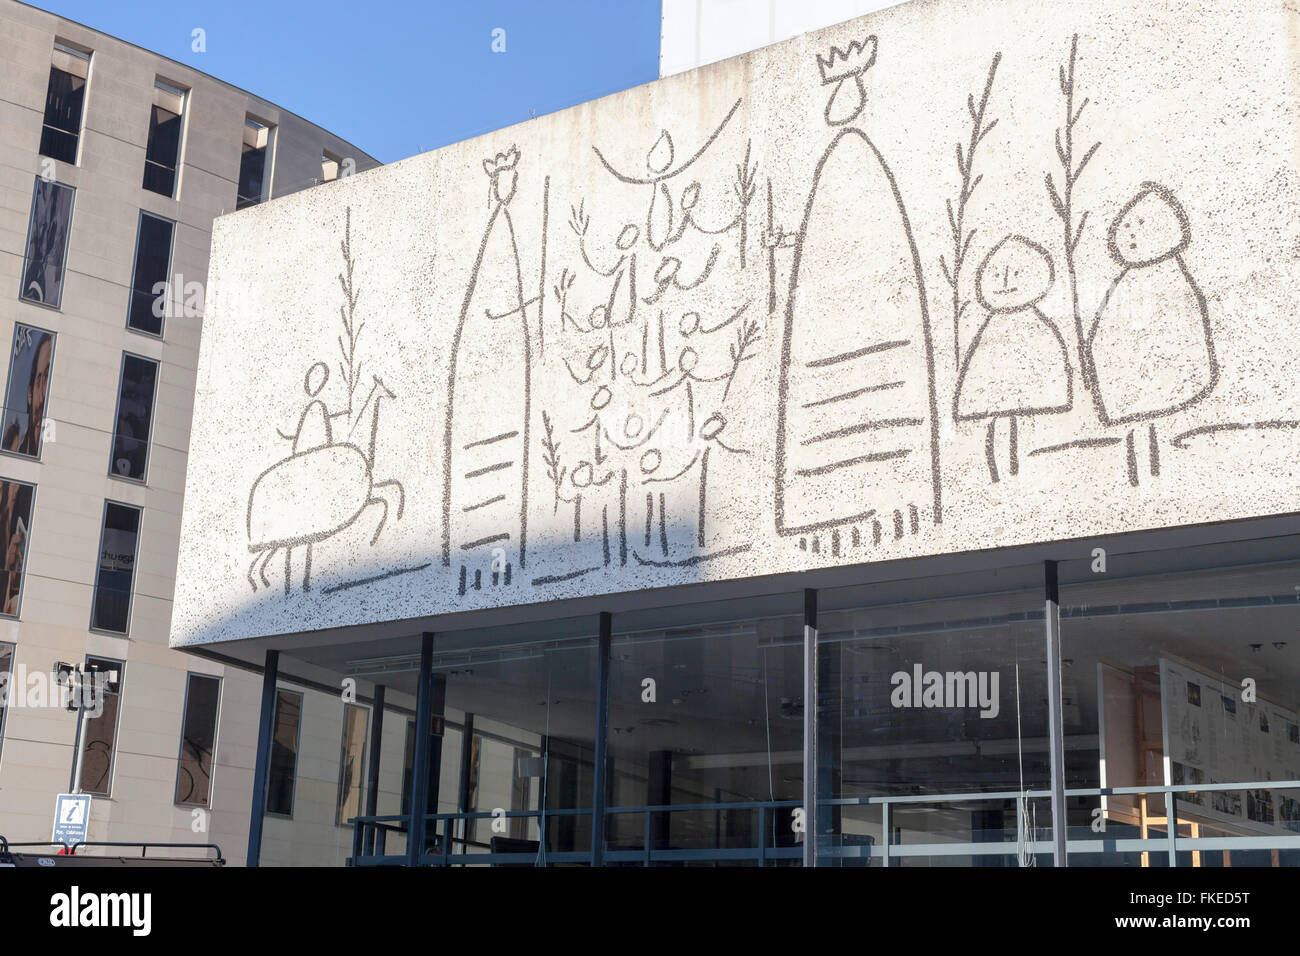 Frontis sgraffito facade designed by Picasso, Col.legi Oficial Arquitectes, Barcelona. Stock Photo